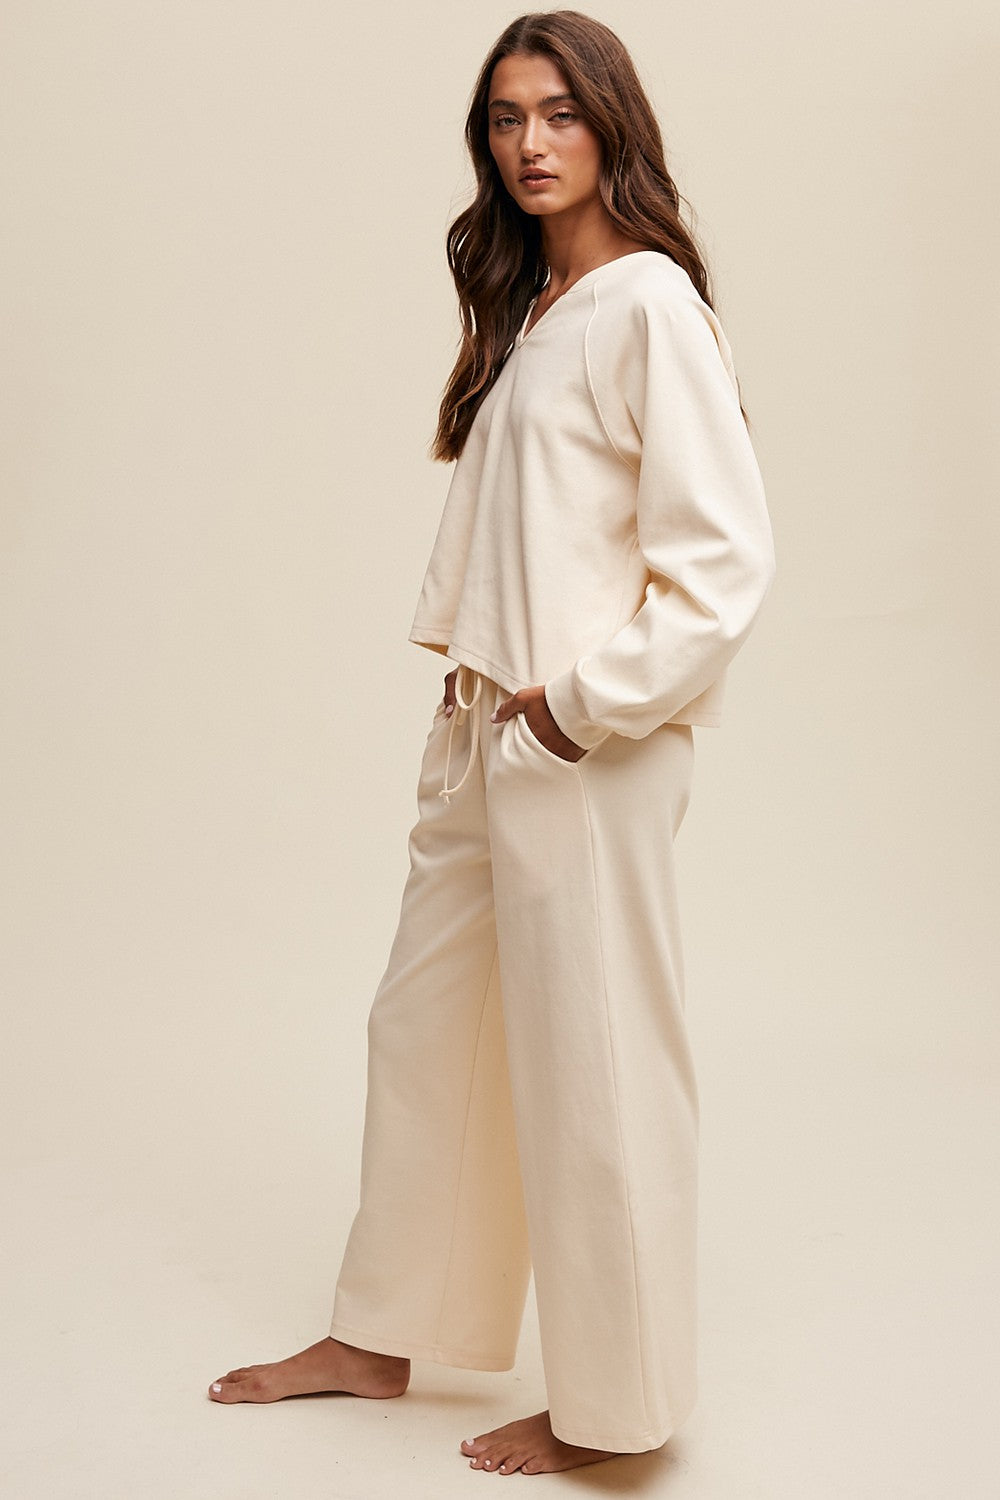 Pre-Order: The Alina Sweatshirt and Pants set in Cream